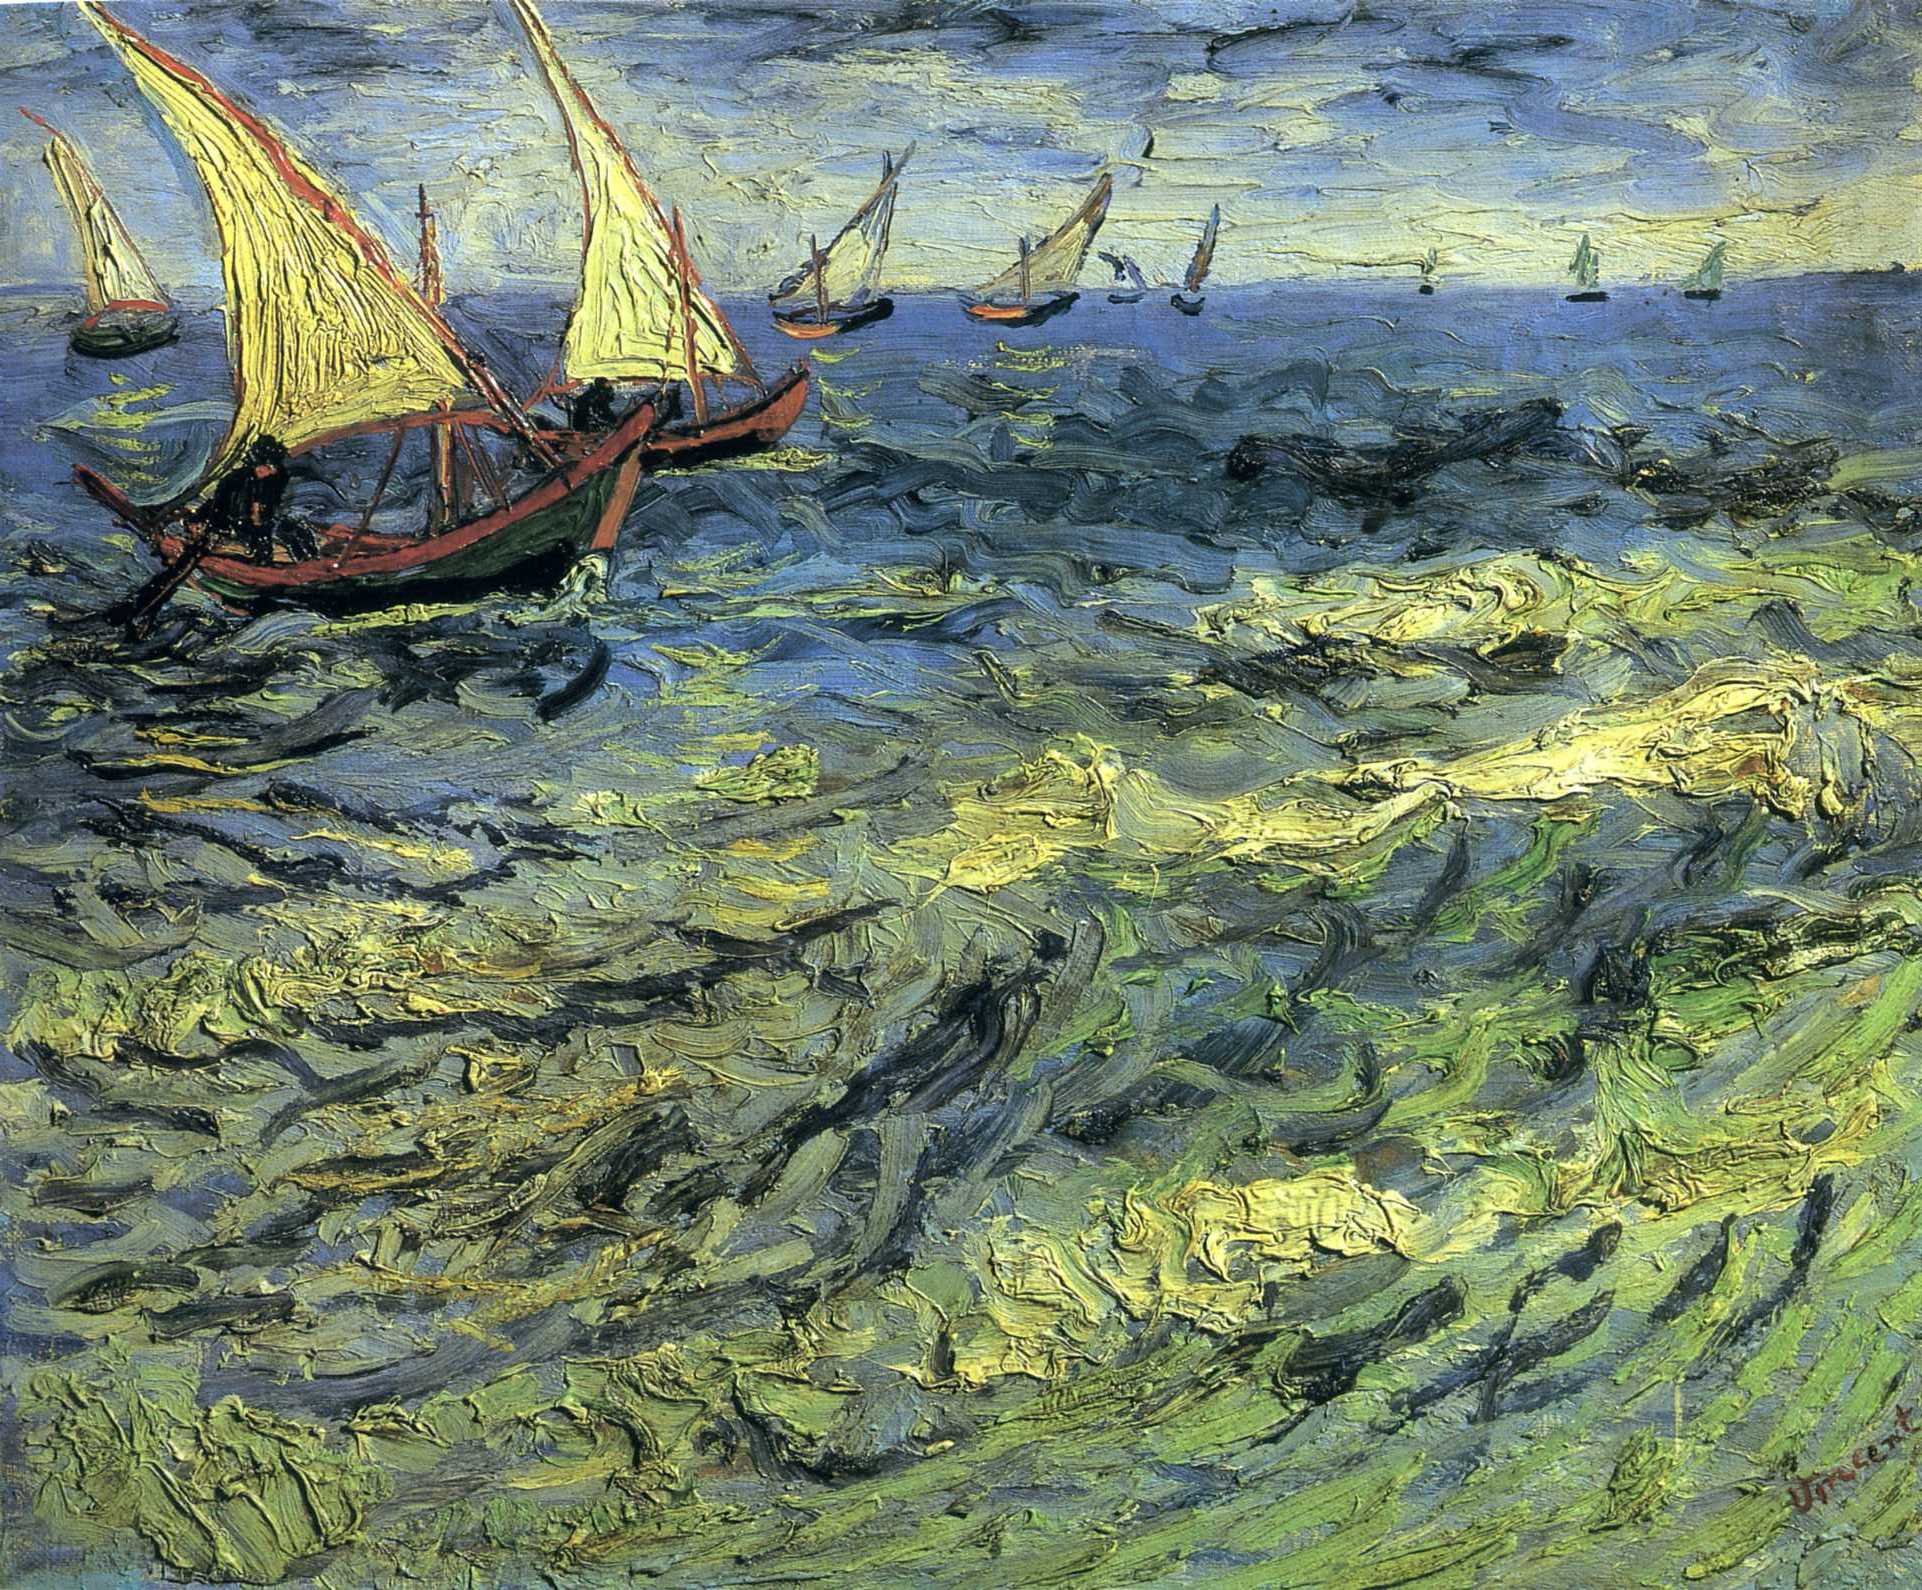 Halászhajók a tengeren by Vincent van Gogh - 1888 - 44 x 53 cm 